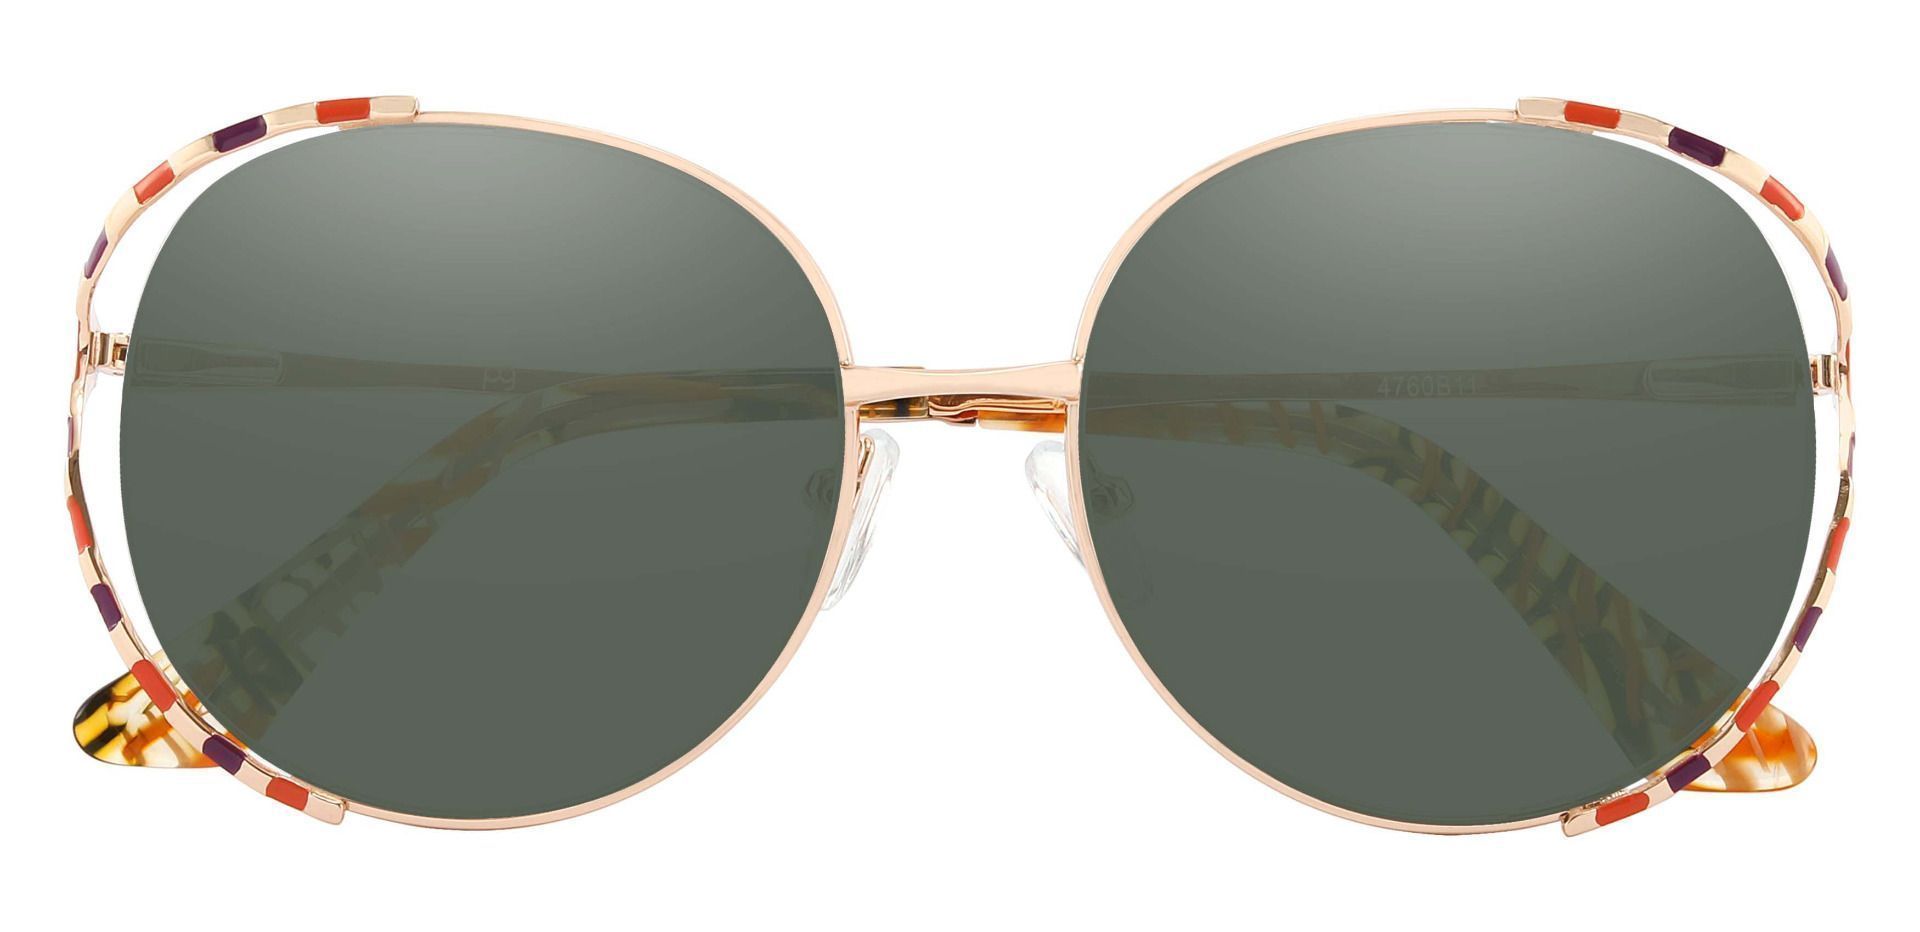 Dorothy Oval Progressive Sunglasses - Brown Frame With Green Lenses